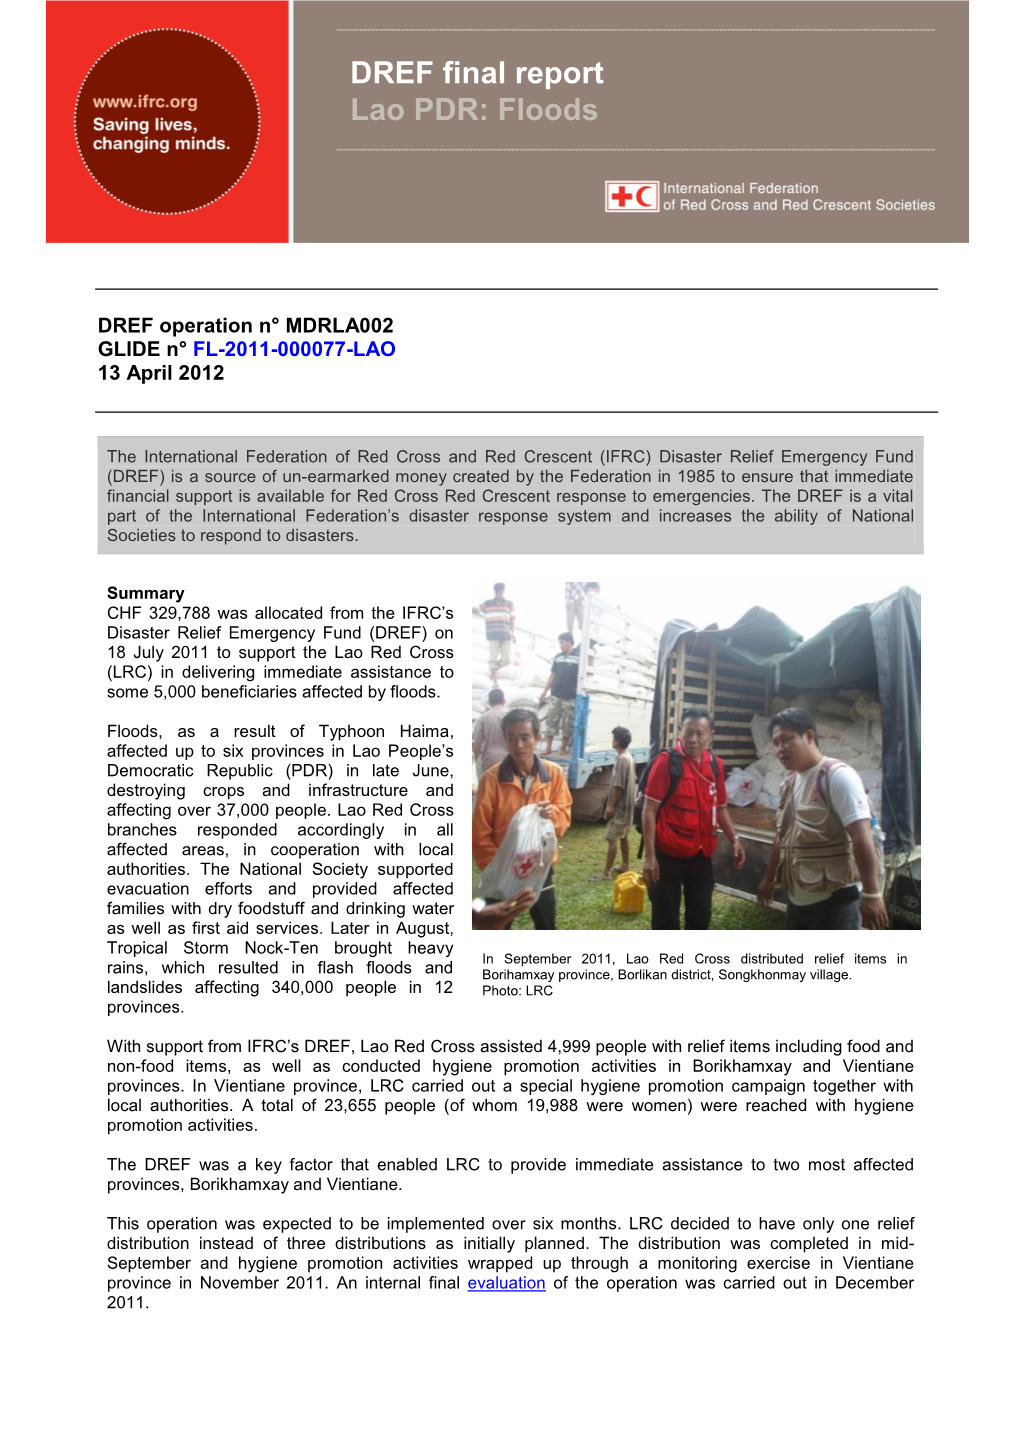 DREF Final Report Lao PDR: Floods